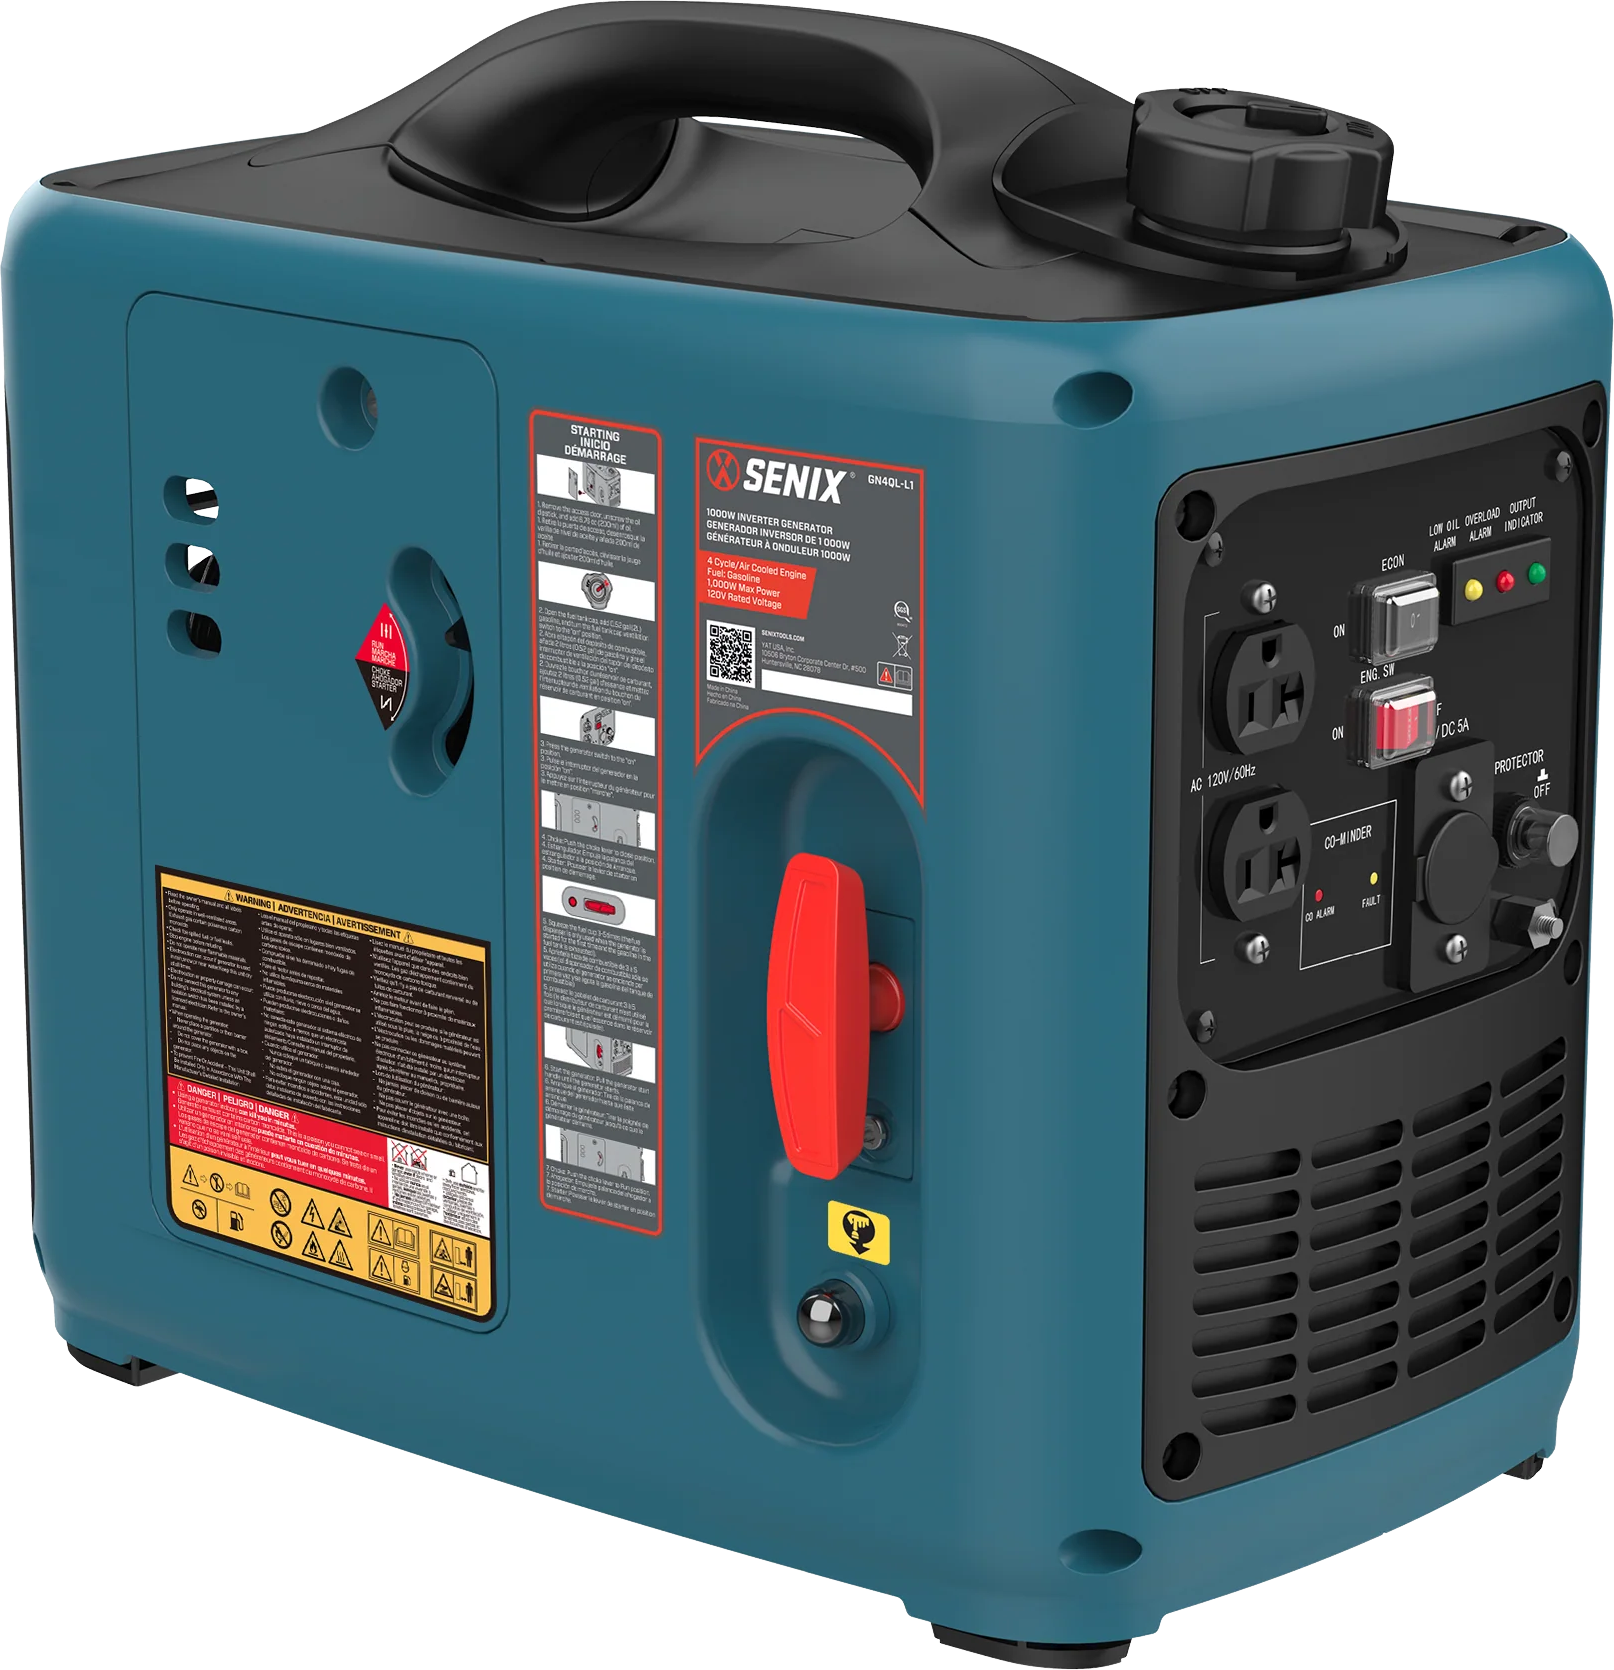 Senix GN4QL-L1 Gas Inverter Generator 1000W Portable New